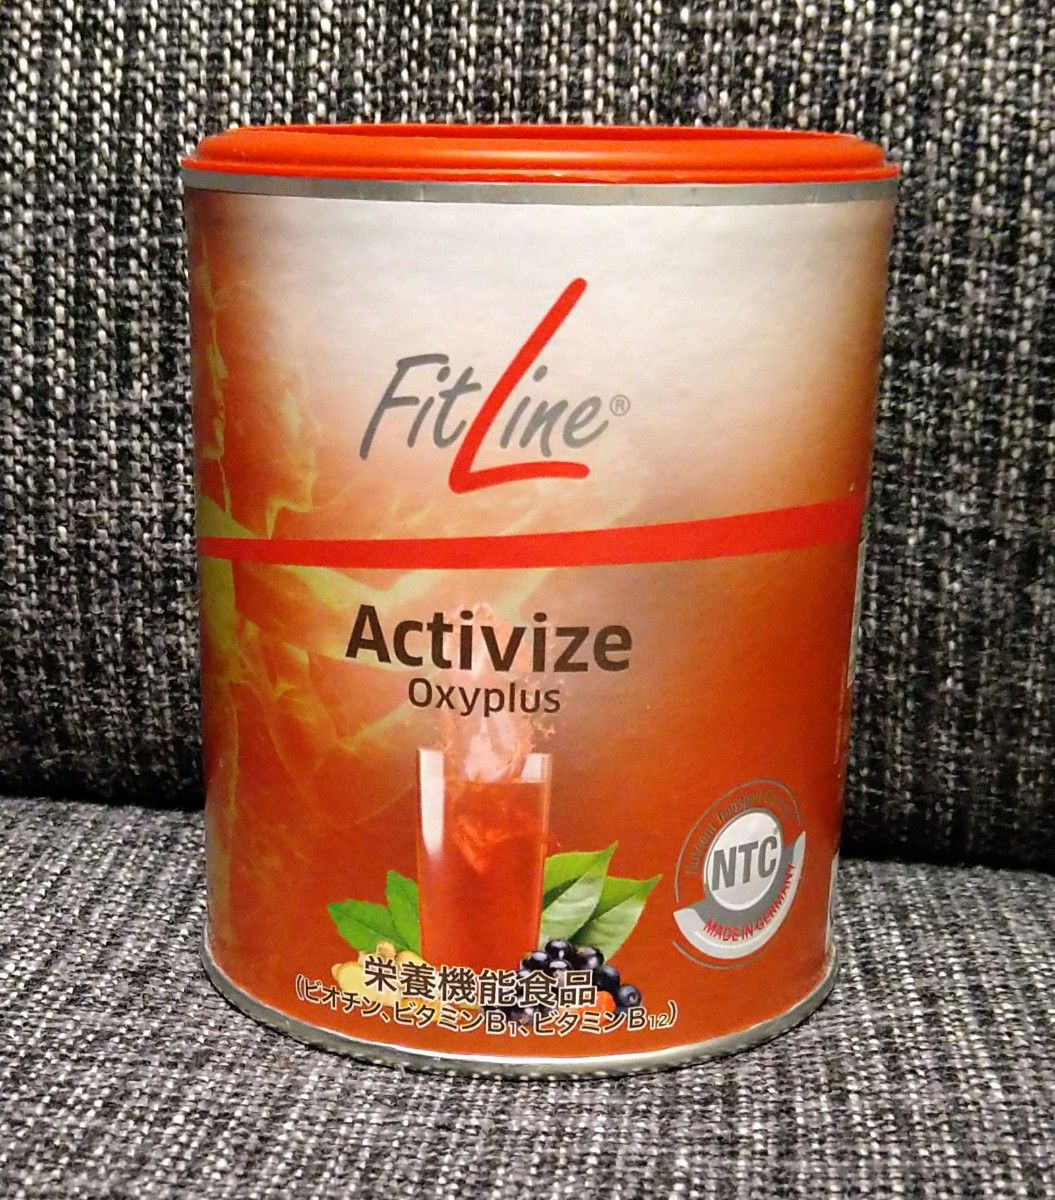 Fitline Activize　正規品